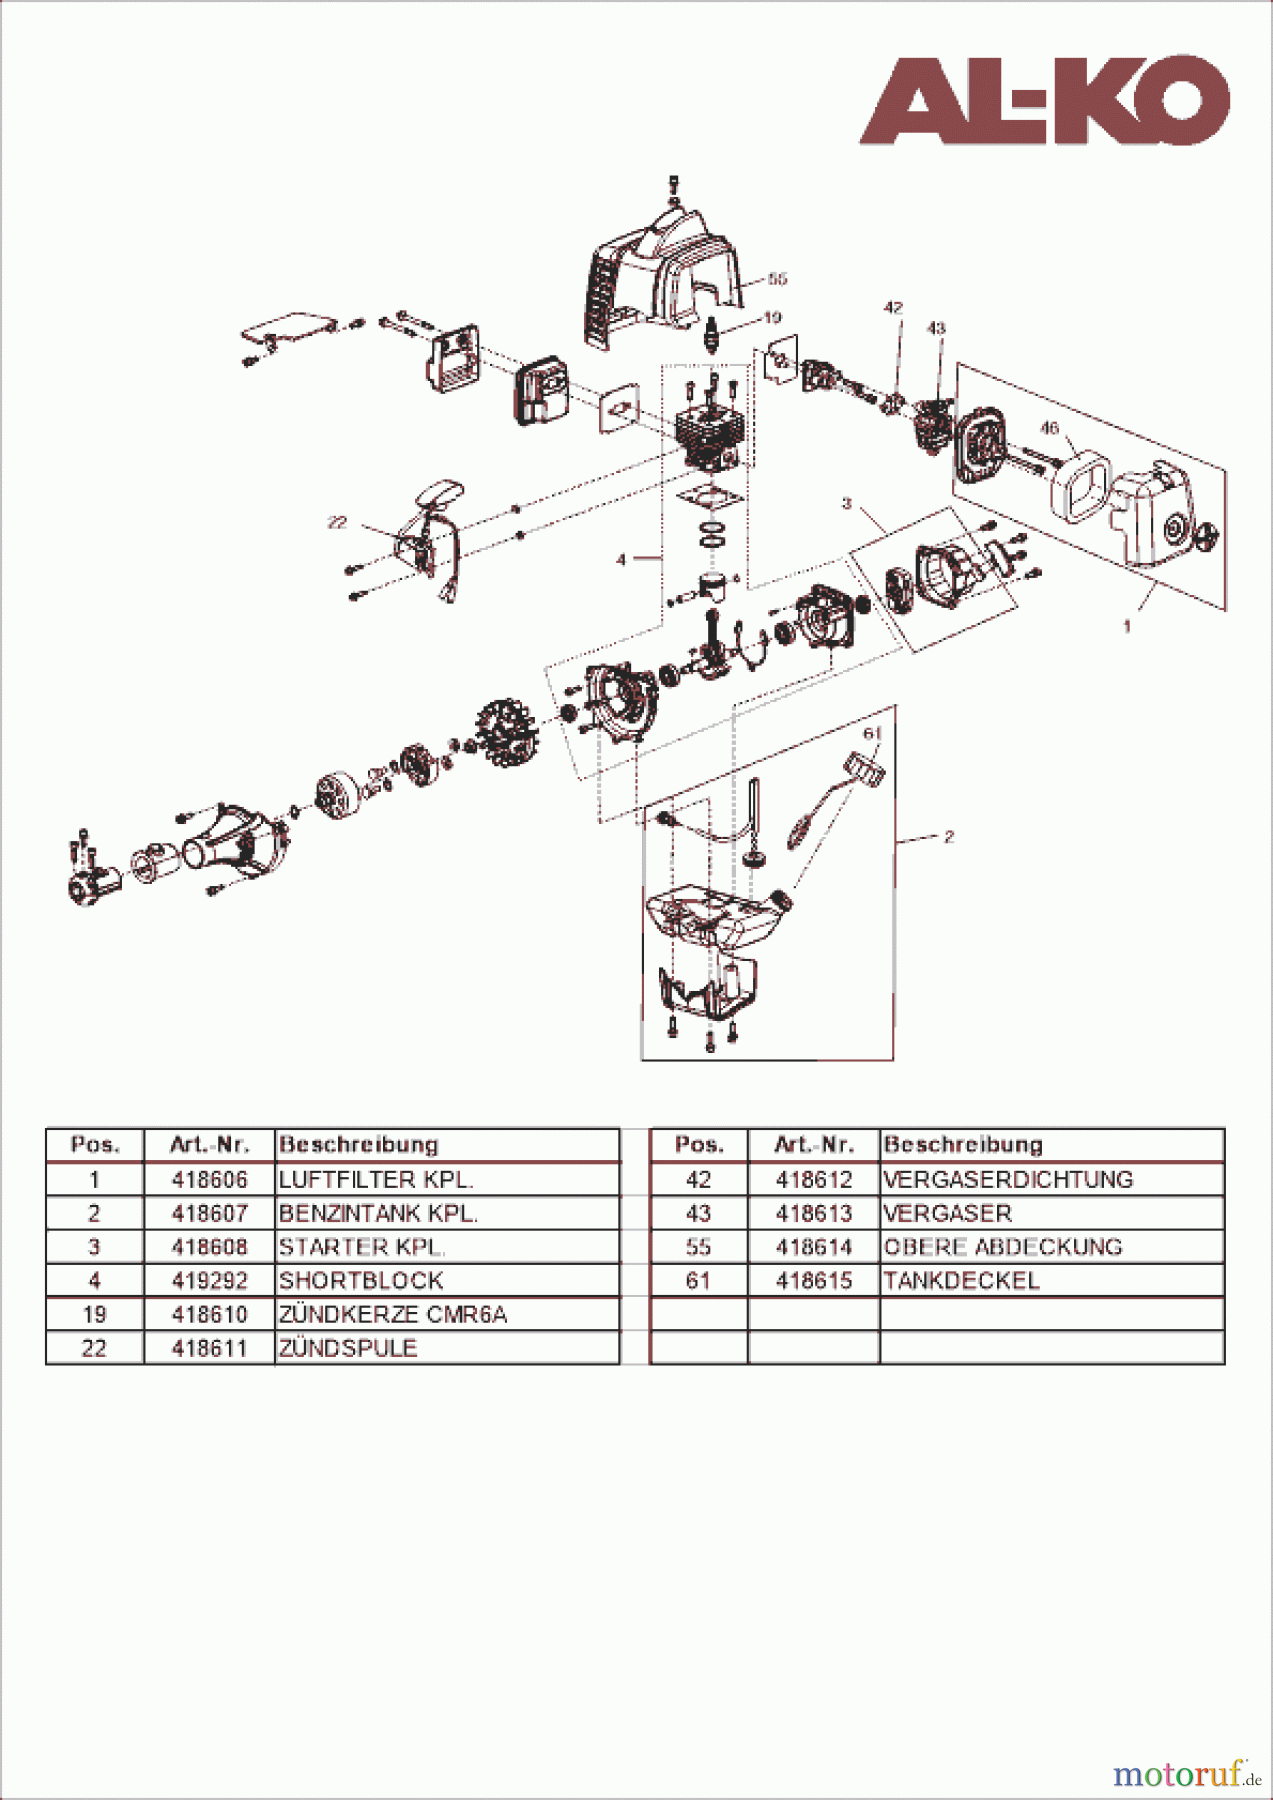  AL-KO Gartentechnik Motorsensen BC 223 B  01/2022 - 11/2022 Seite 2